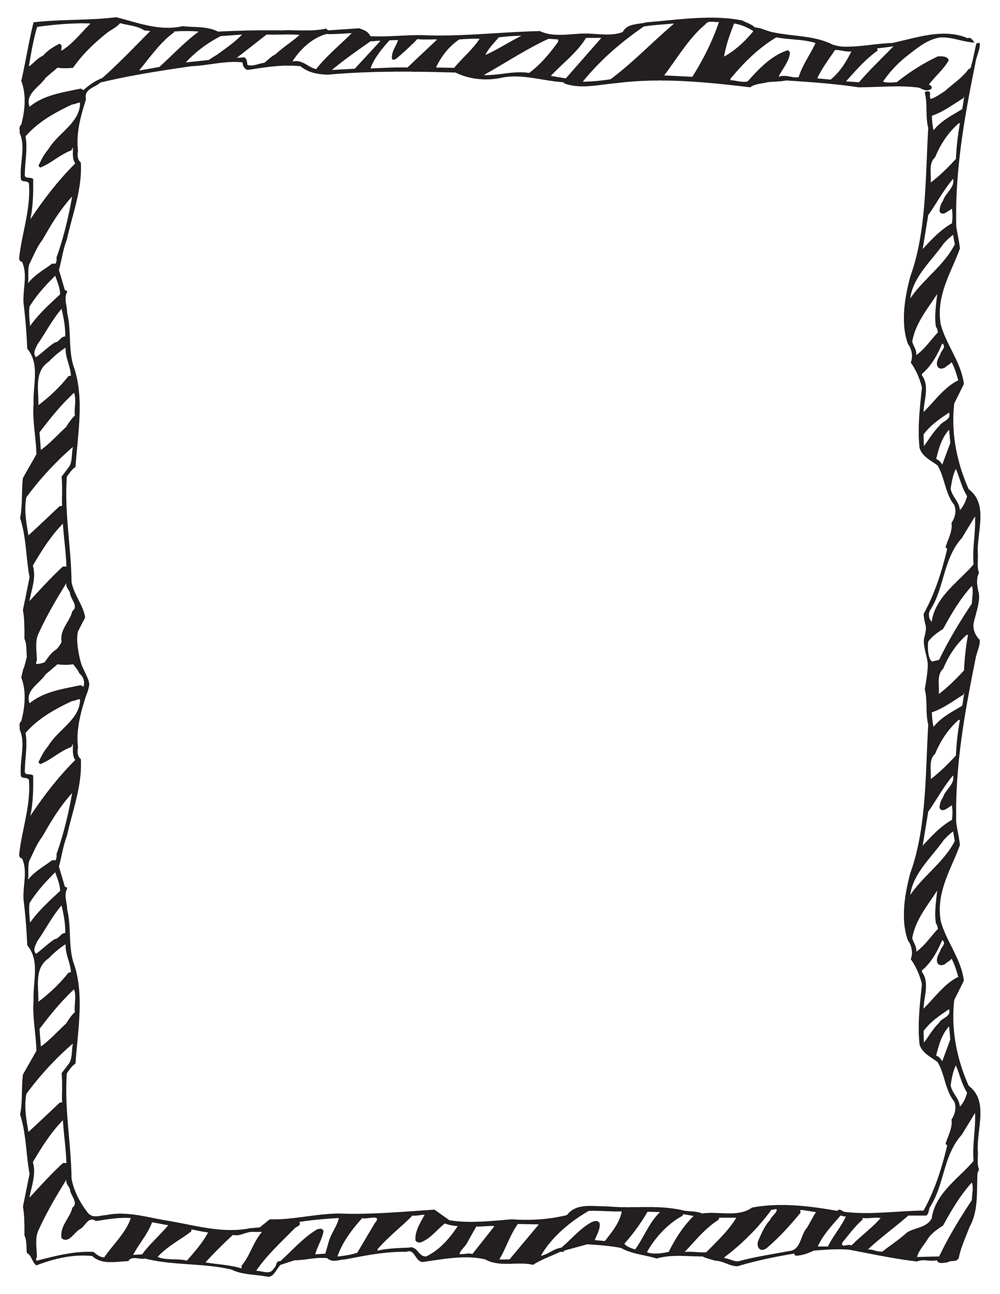 Free Zebra Page Border, Download Free Clip Art, Free Clip Art on